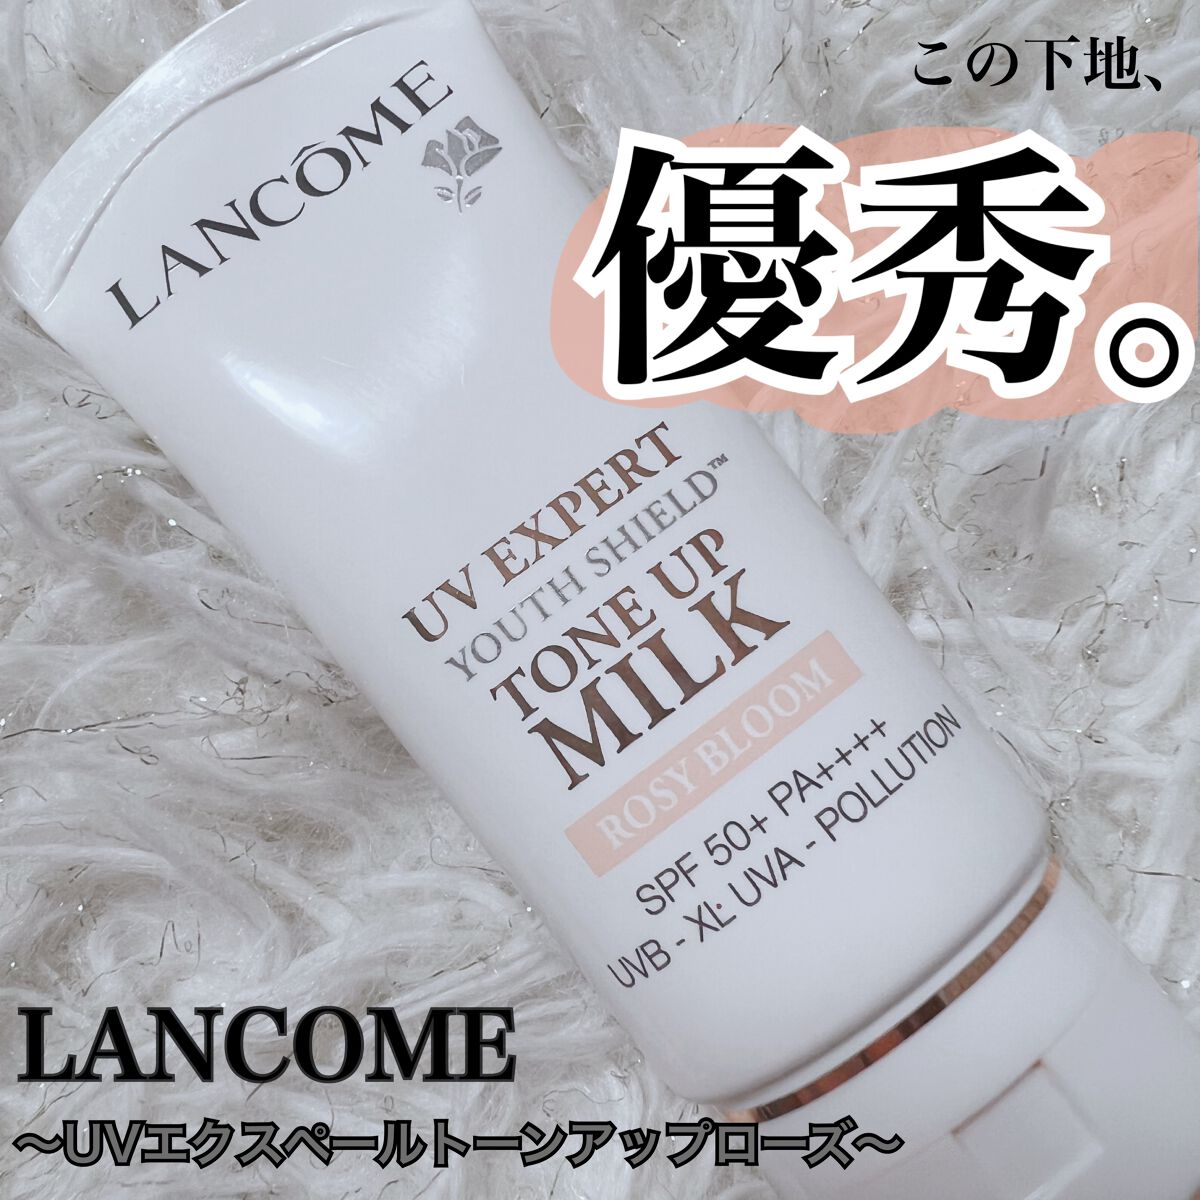 LANCOME UVエクスペール BB Ⅱ  日焼け止め用乳液